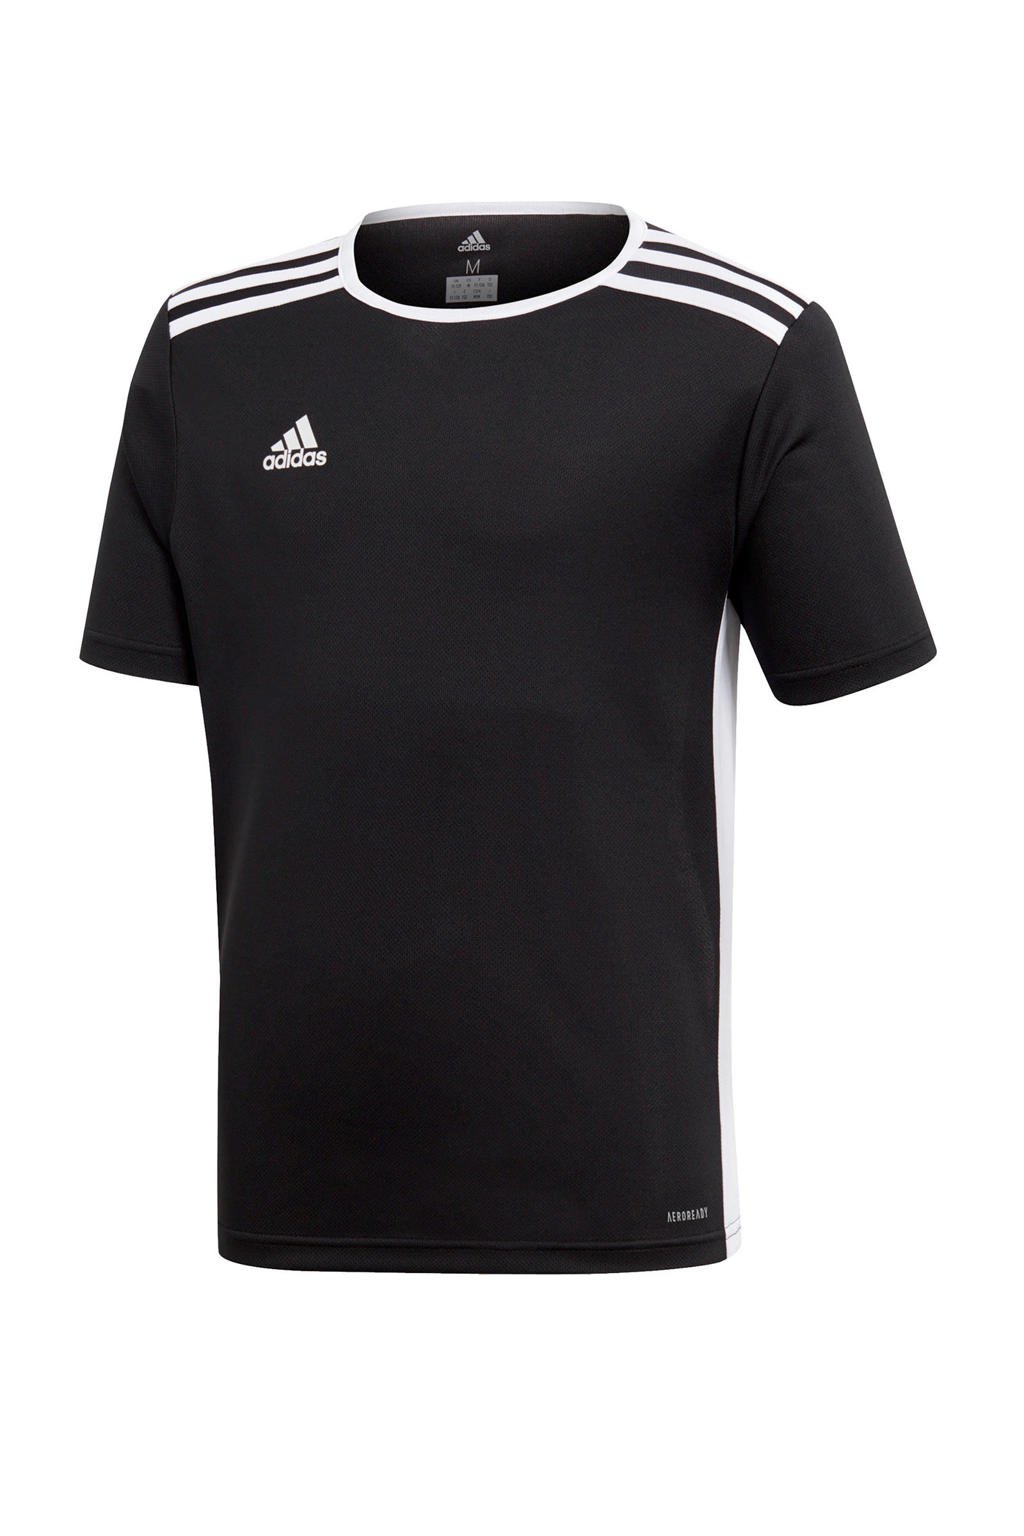 adidas Performance Junior  voetbalshirt zwart